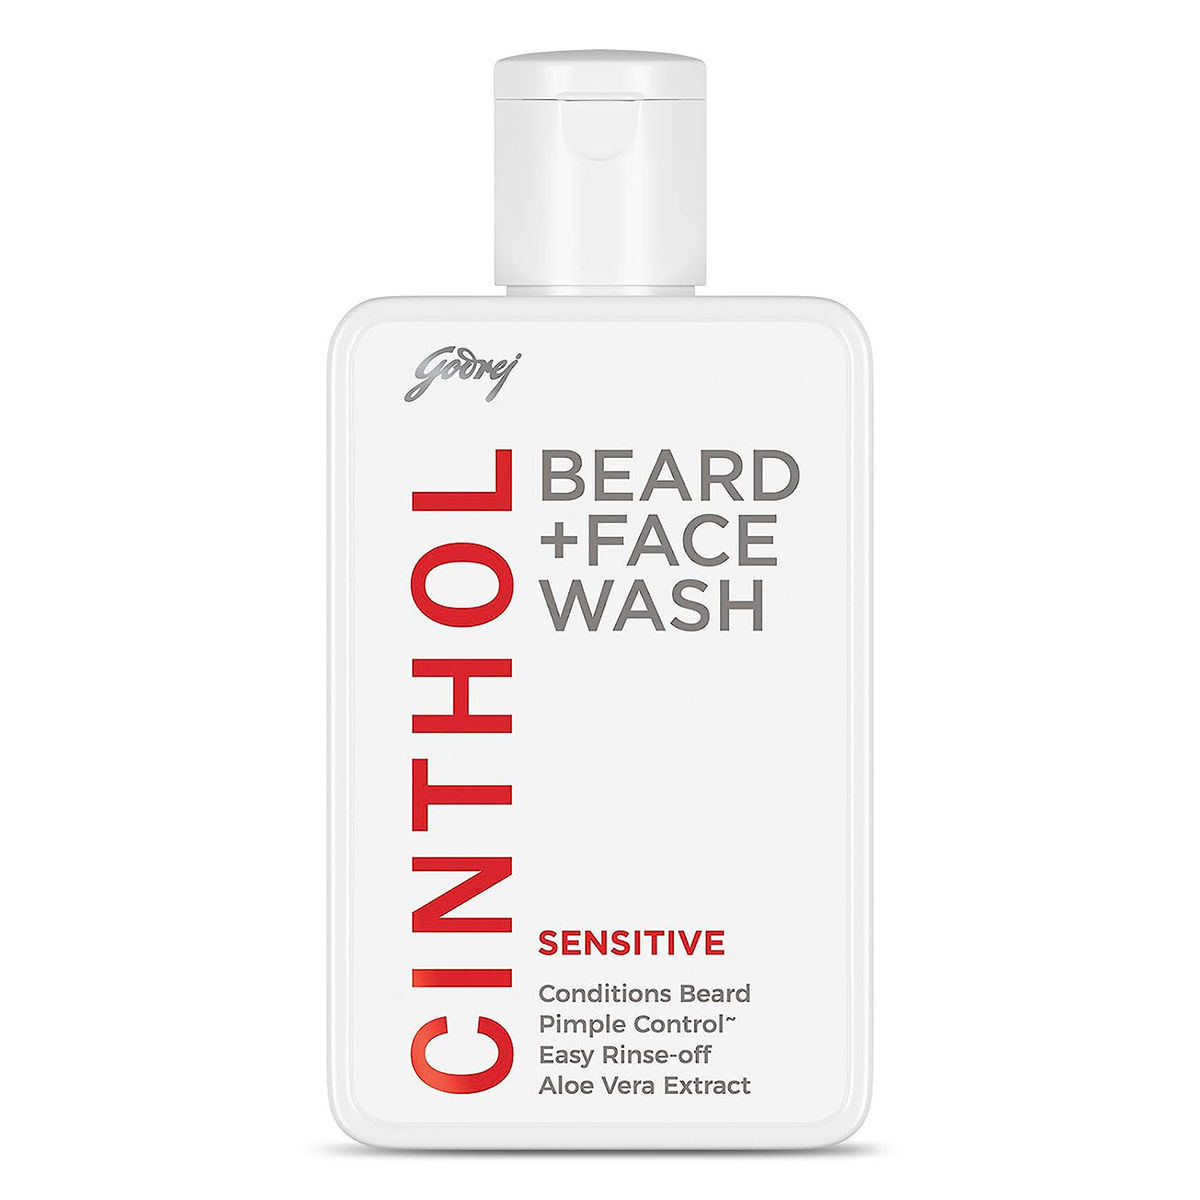 Buy Cinthol Beard+Face Wash For Sensitive Skin, 100 ml Online